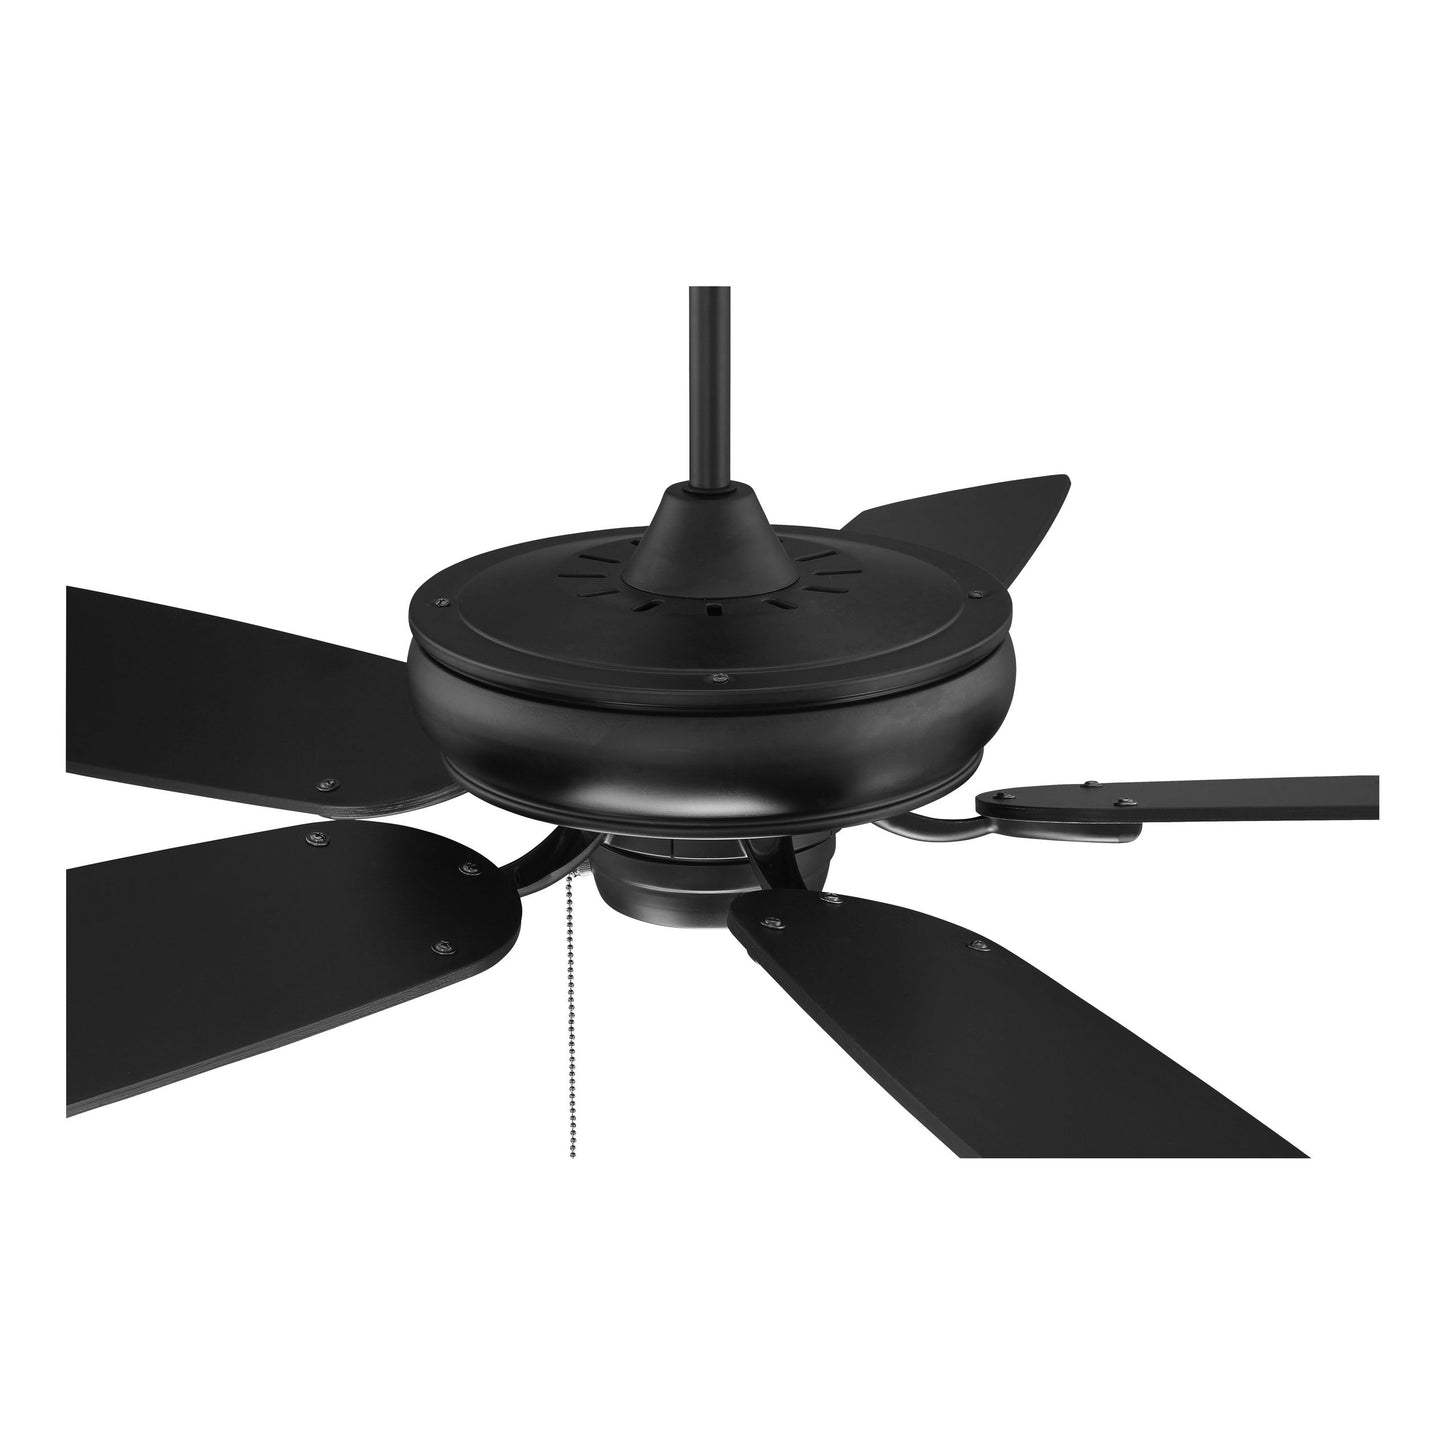 SAP56FB5 - Supreme Air Plus 56" 5 Blade Indoor / Outdoor Ceiling Fan - Pull Chain - Flat Black